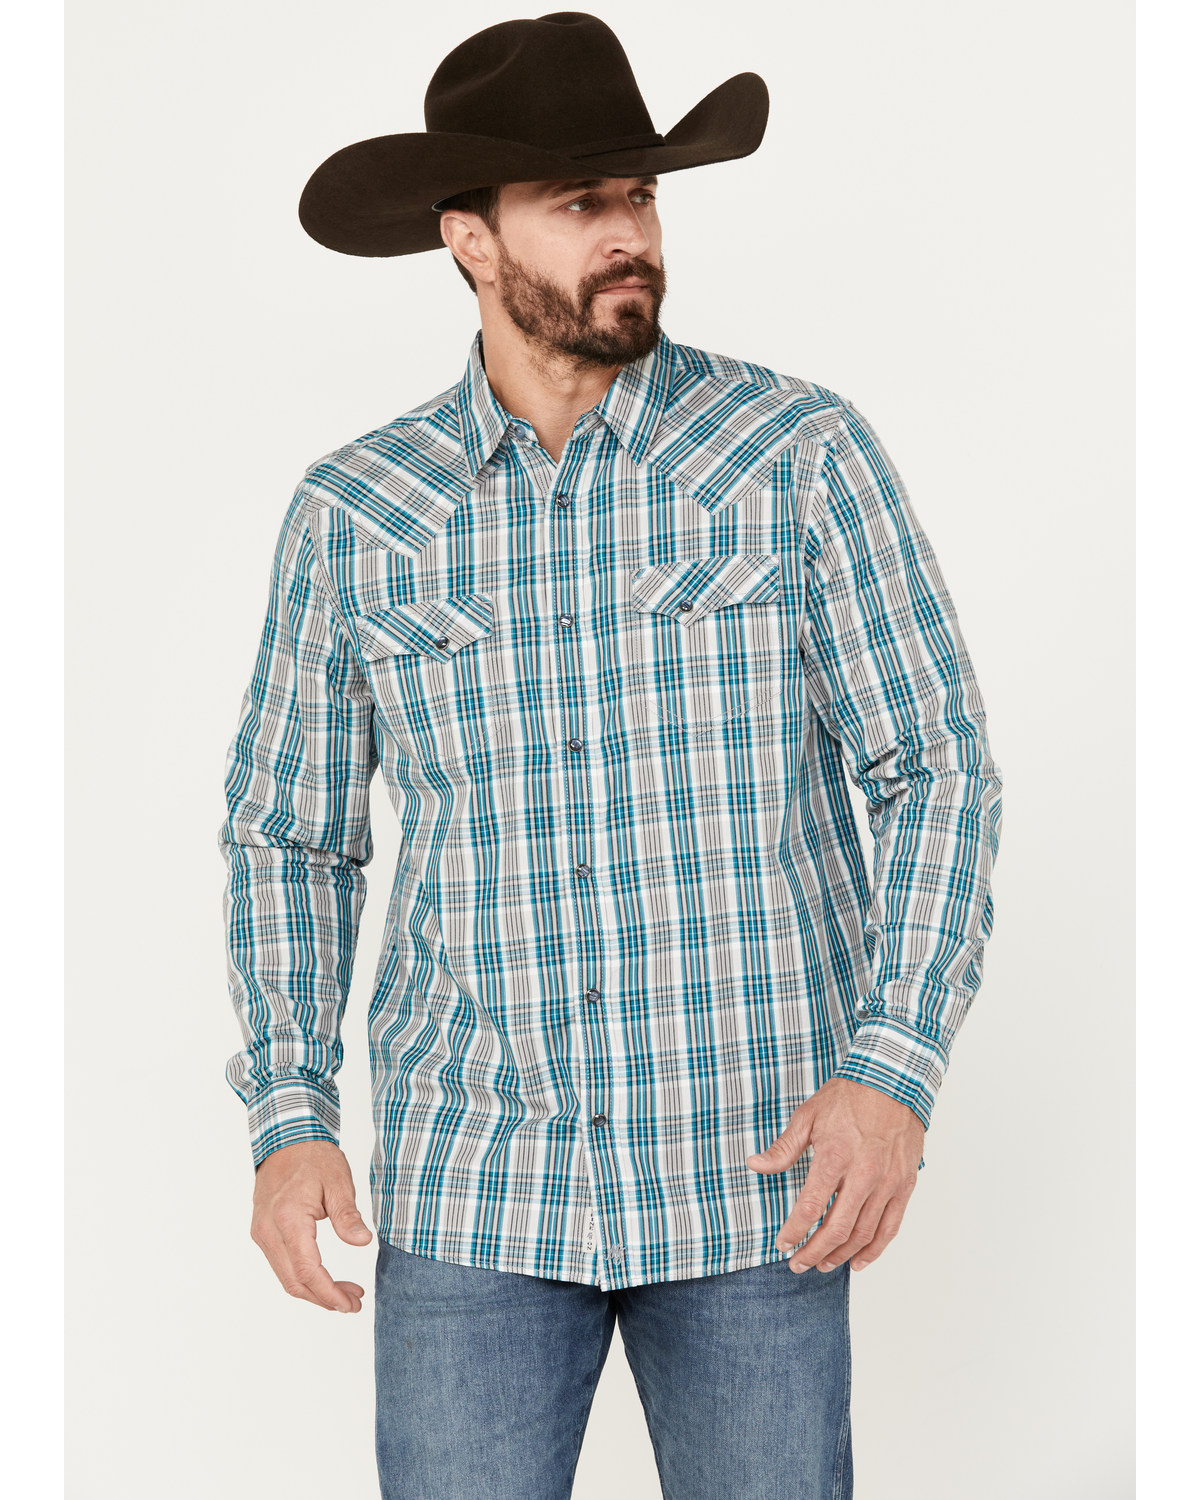 Moonshine Spirit Men's Agave Plaid Print Long Sleeve Western Snap Shirt